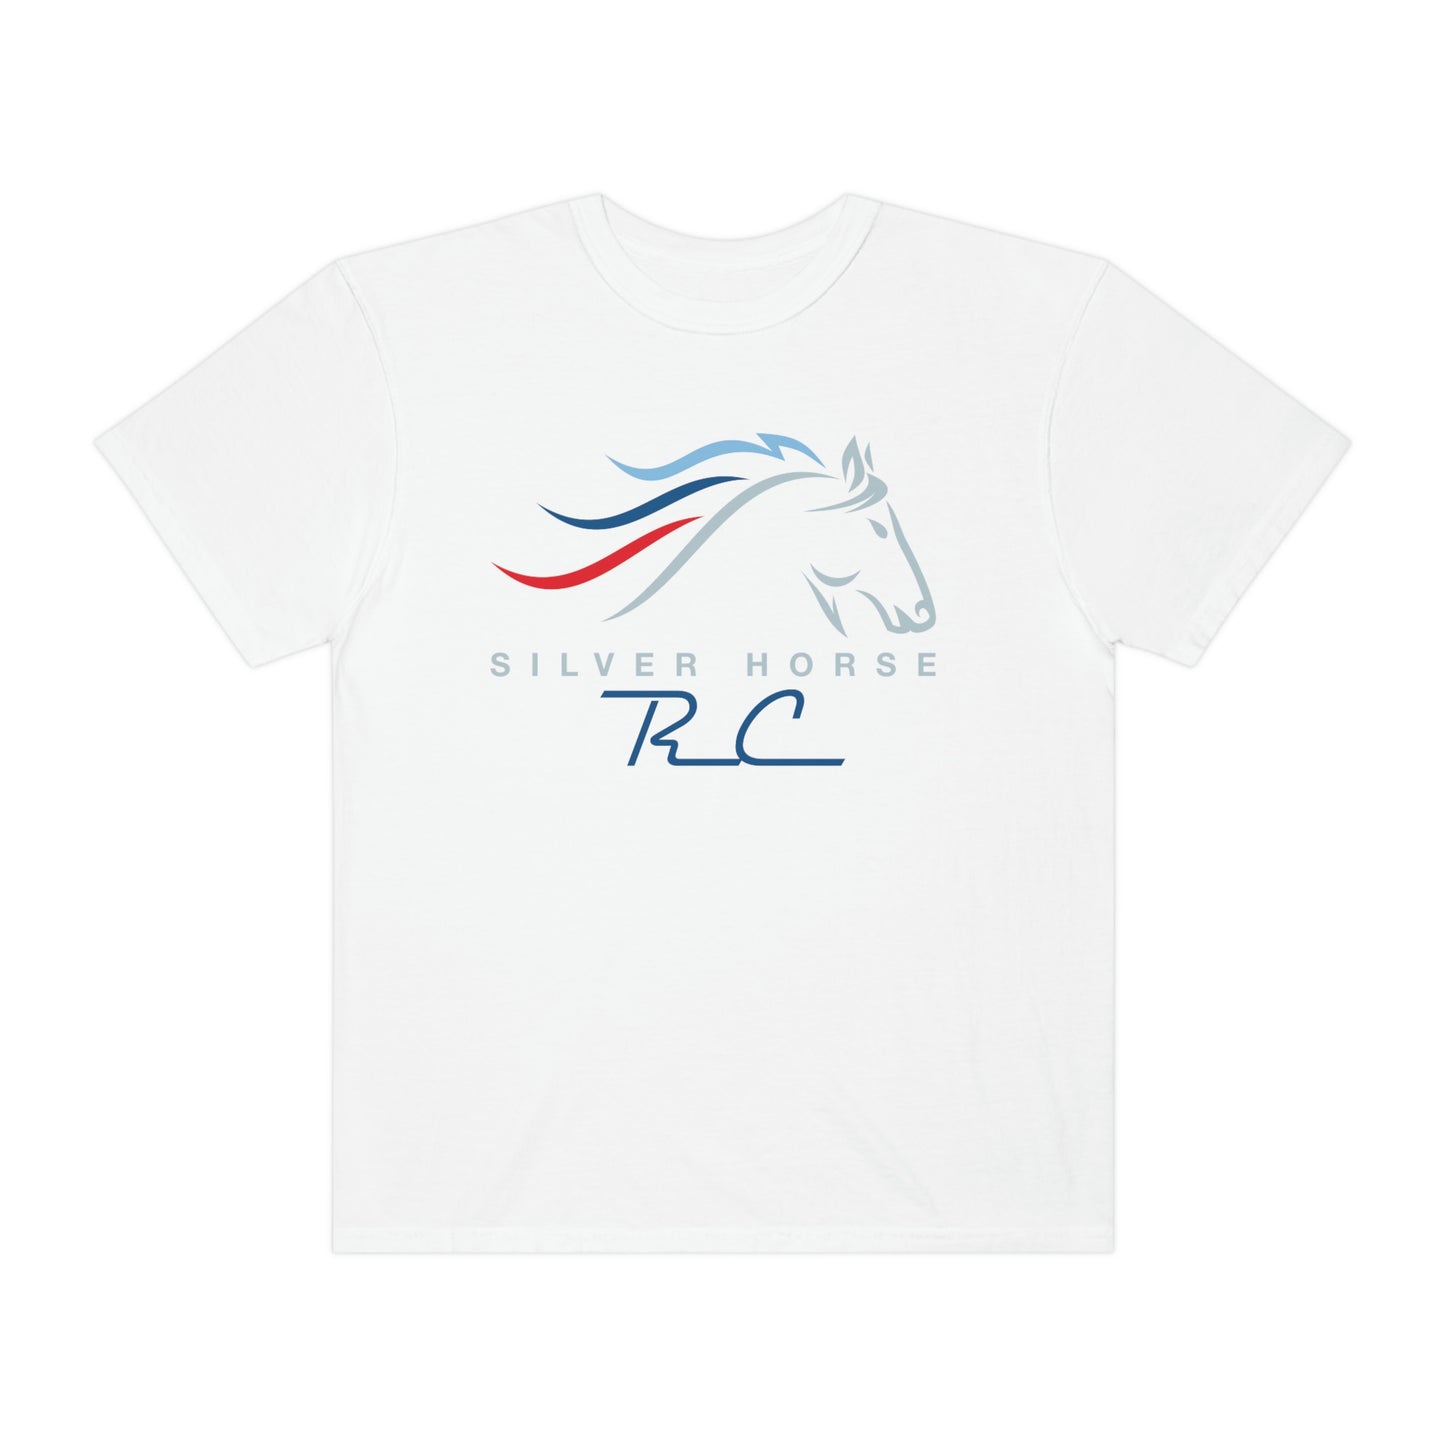 Silver Horse RC Unisex Garment-Dyed T-shirt